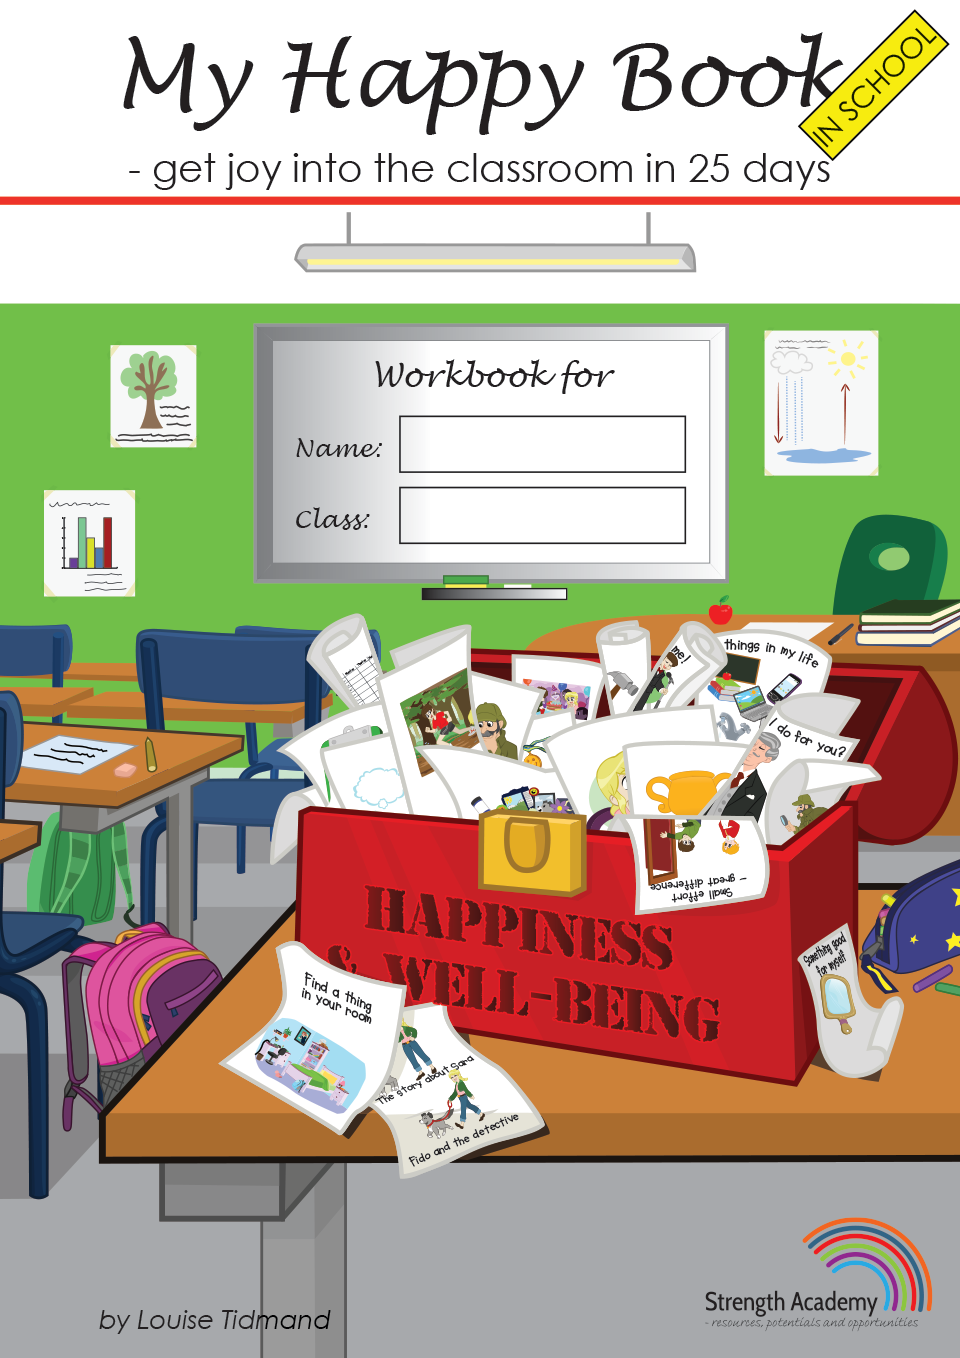 My Happy Book in School - get joy into the classroom in 25 days, workbook